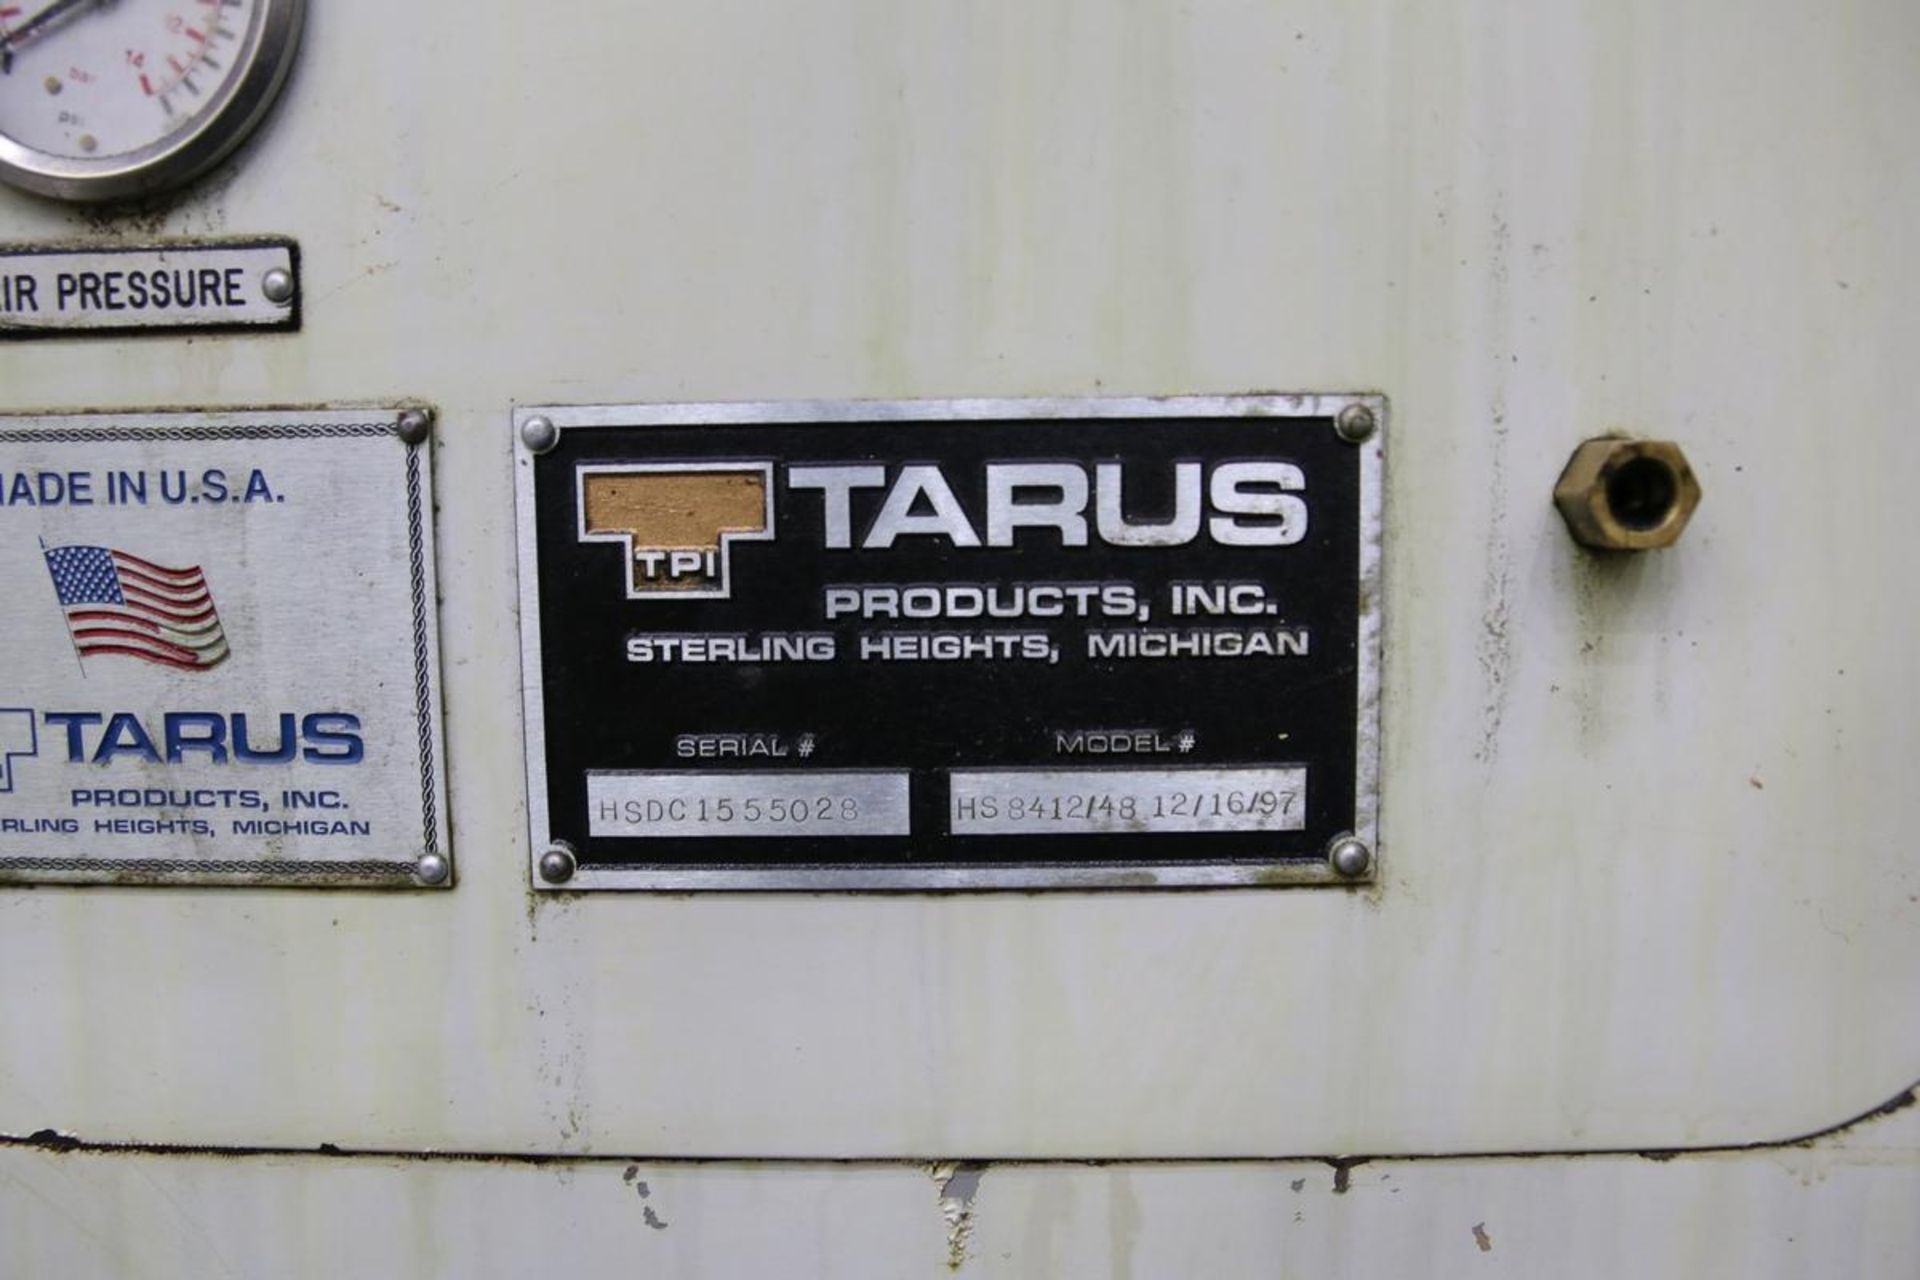 1997 Tarus HS8412/48 CNC Profile Milling Machine - Image 21 of 21